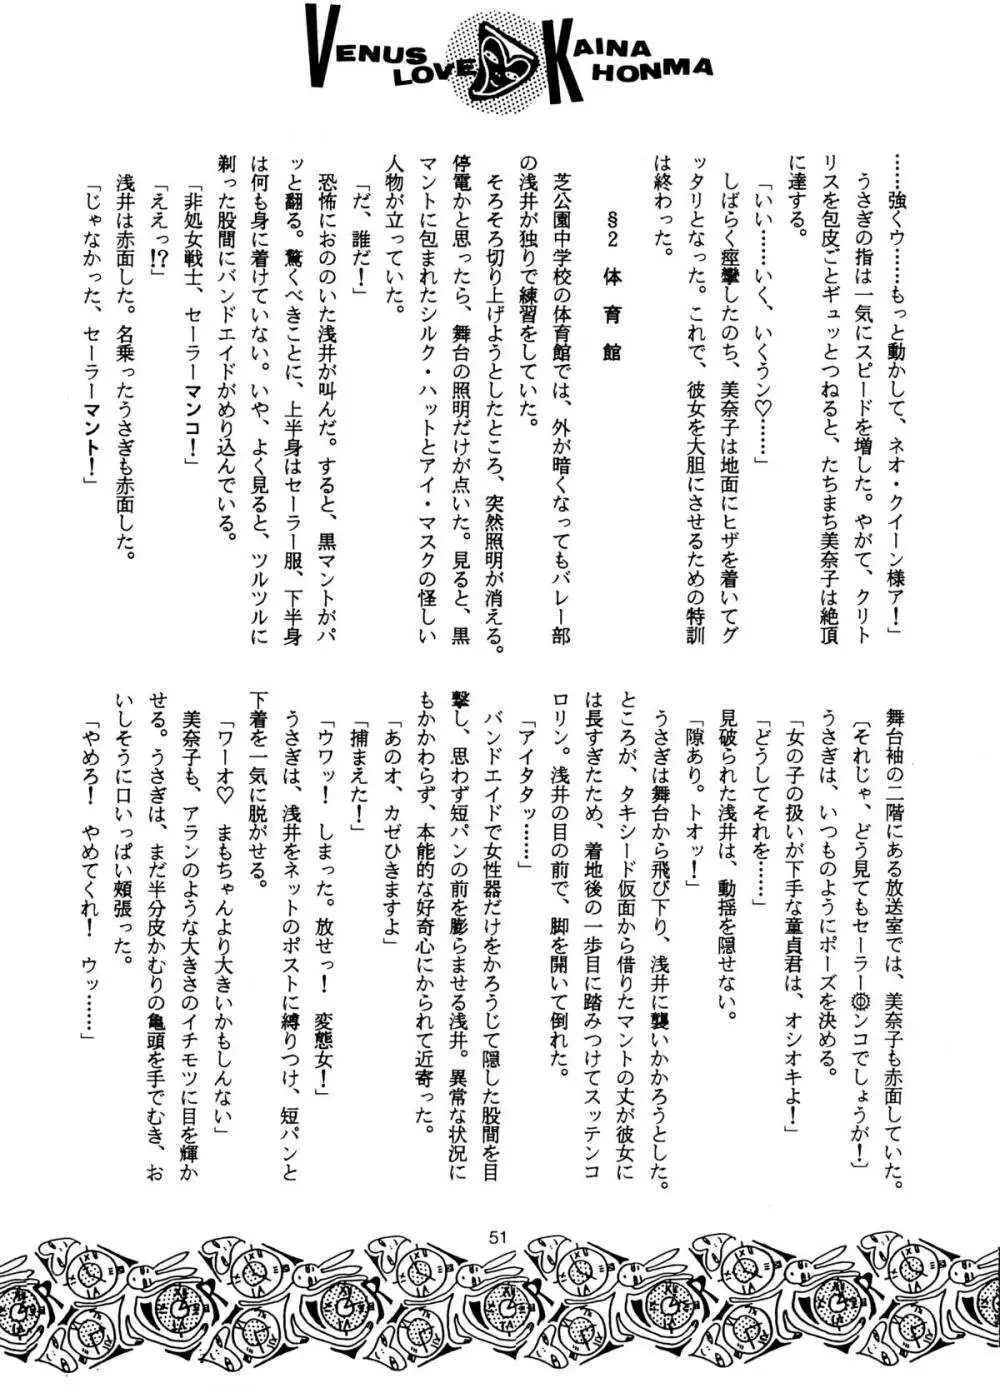 I KNOW MINAKO - page50